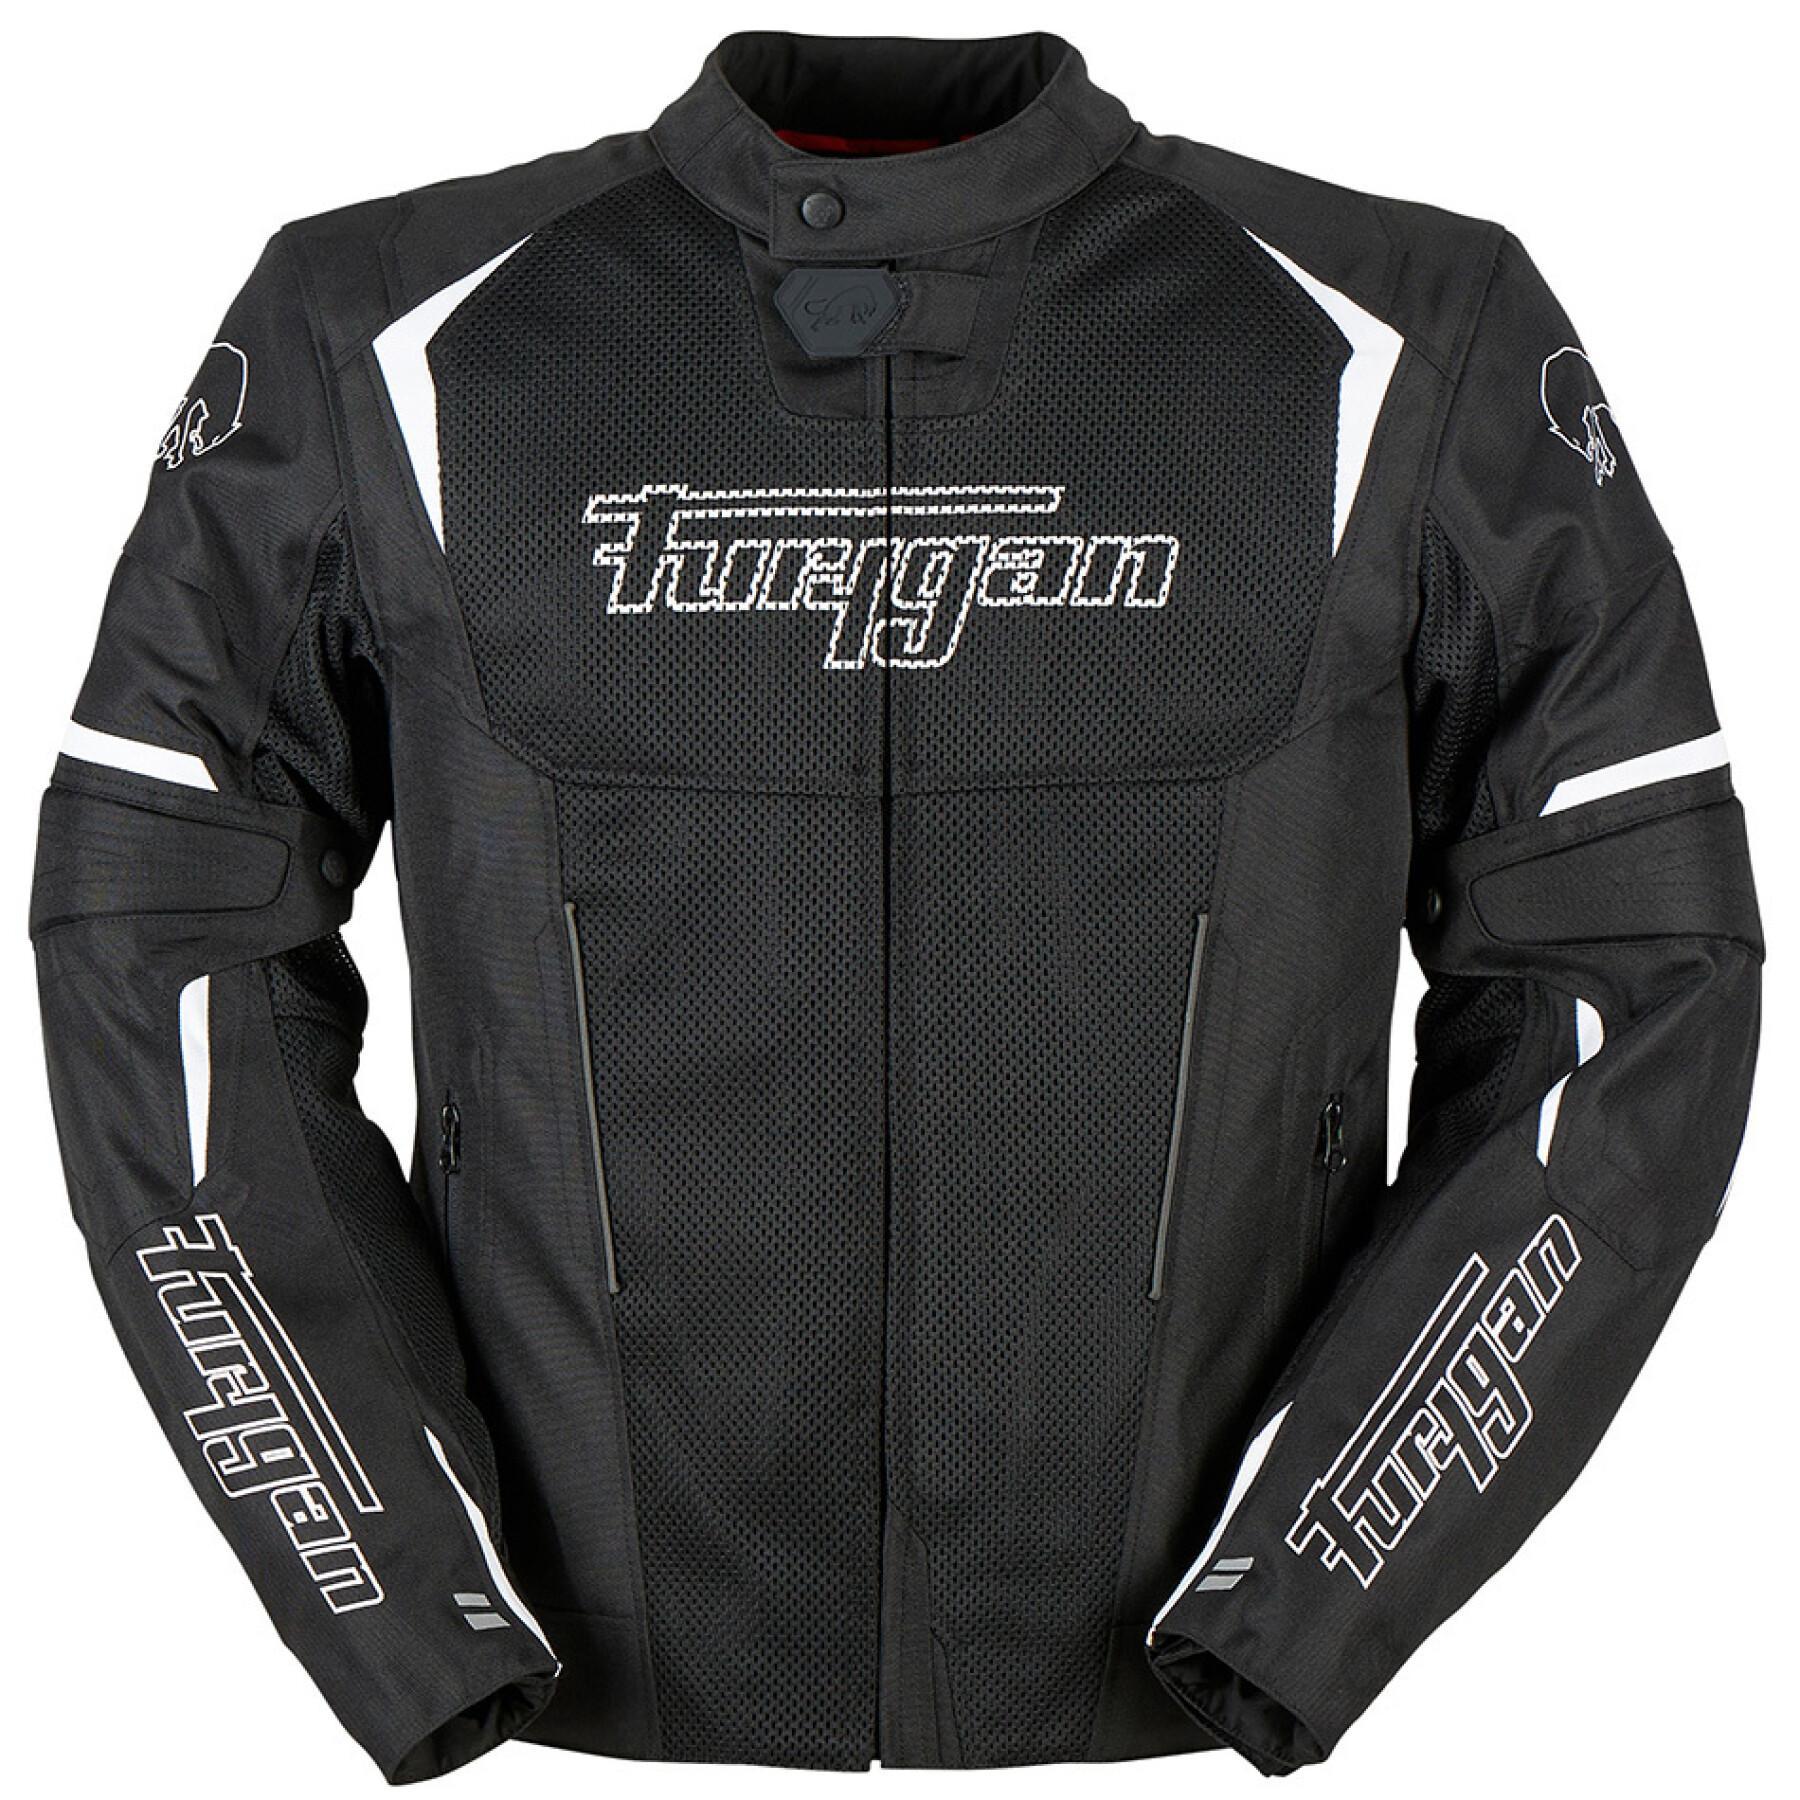 Motorcycle jacket Furygan Ultraspark 3 en 1